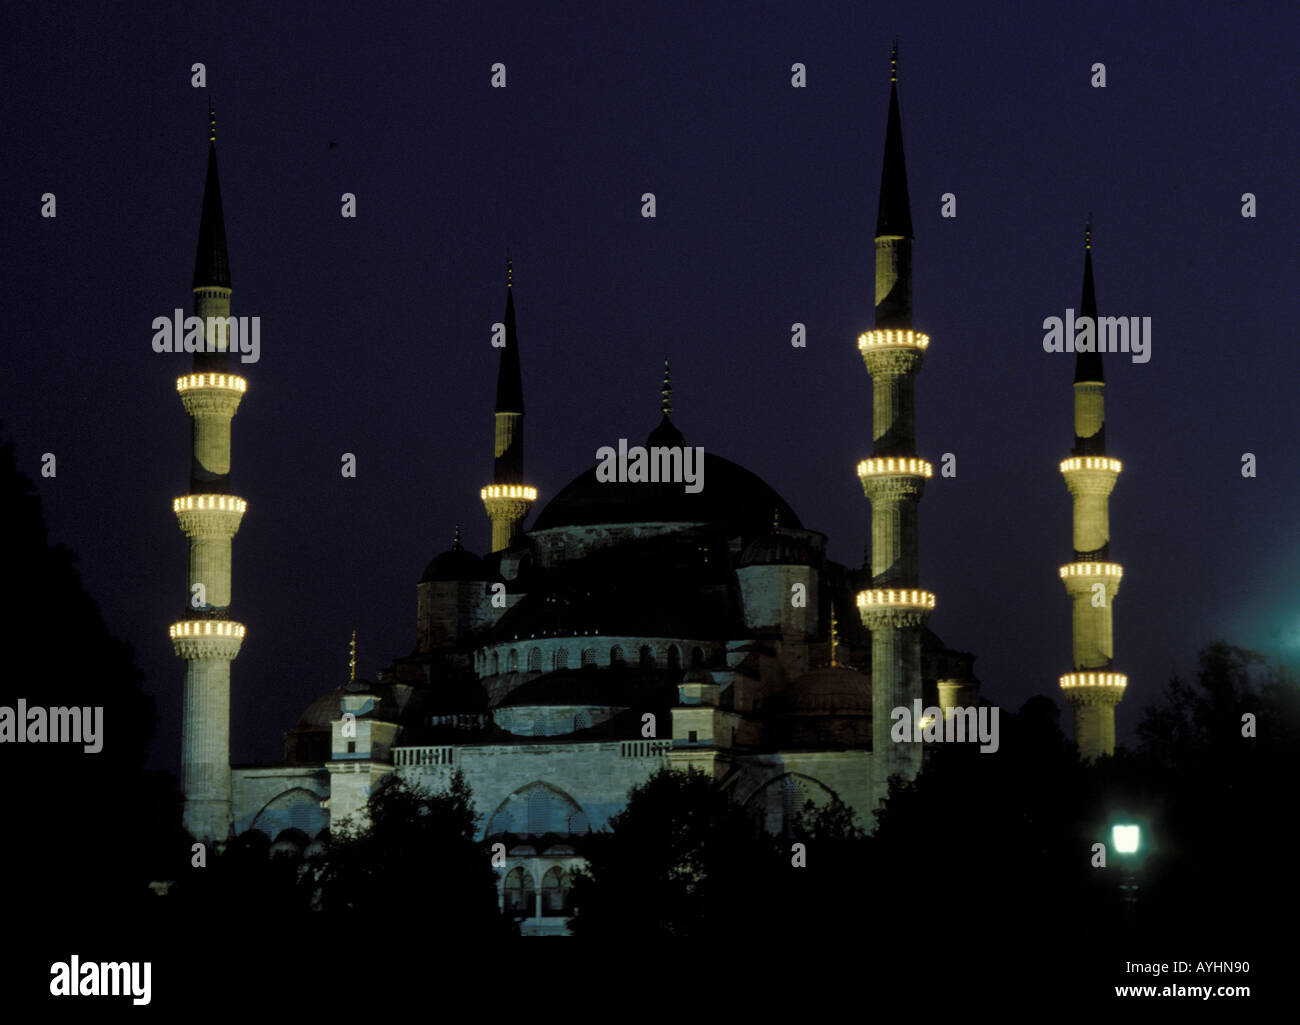 Die Sultan Ahmet Blaue Moschee in Istanbul bei Nacht Foto Stock